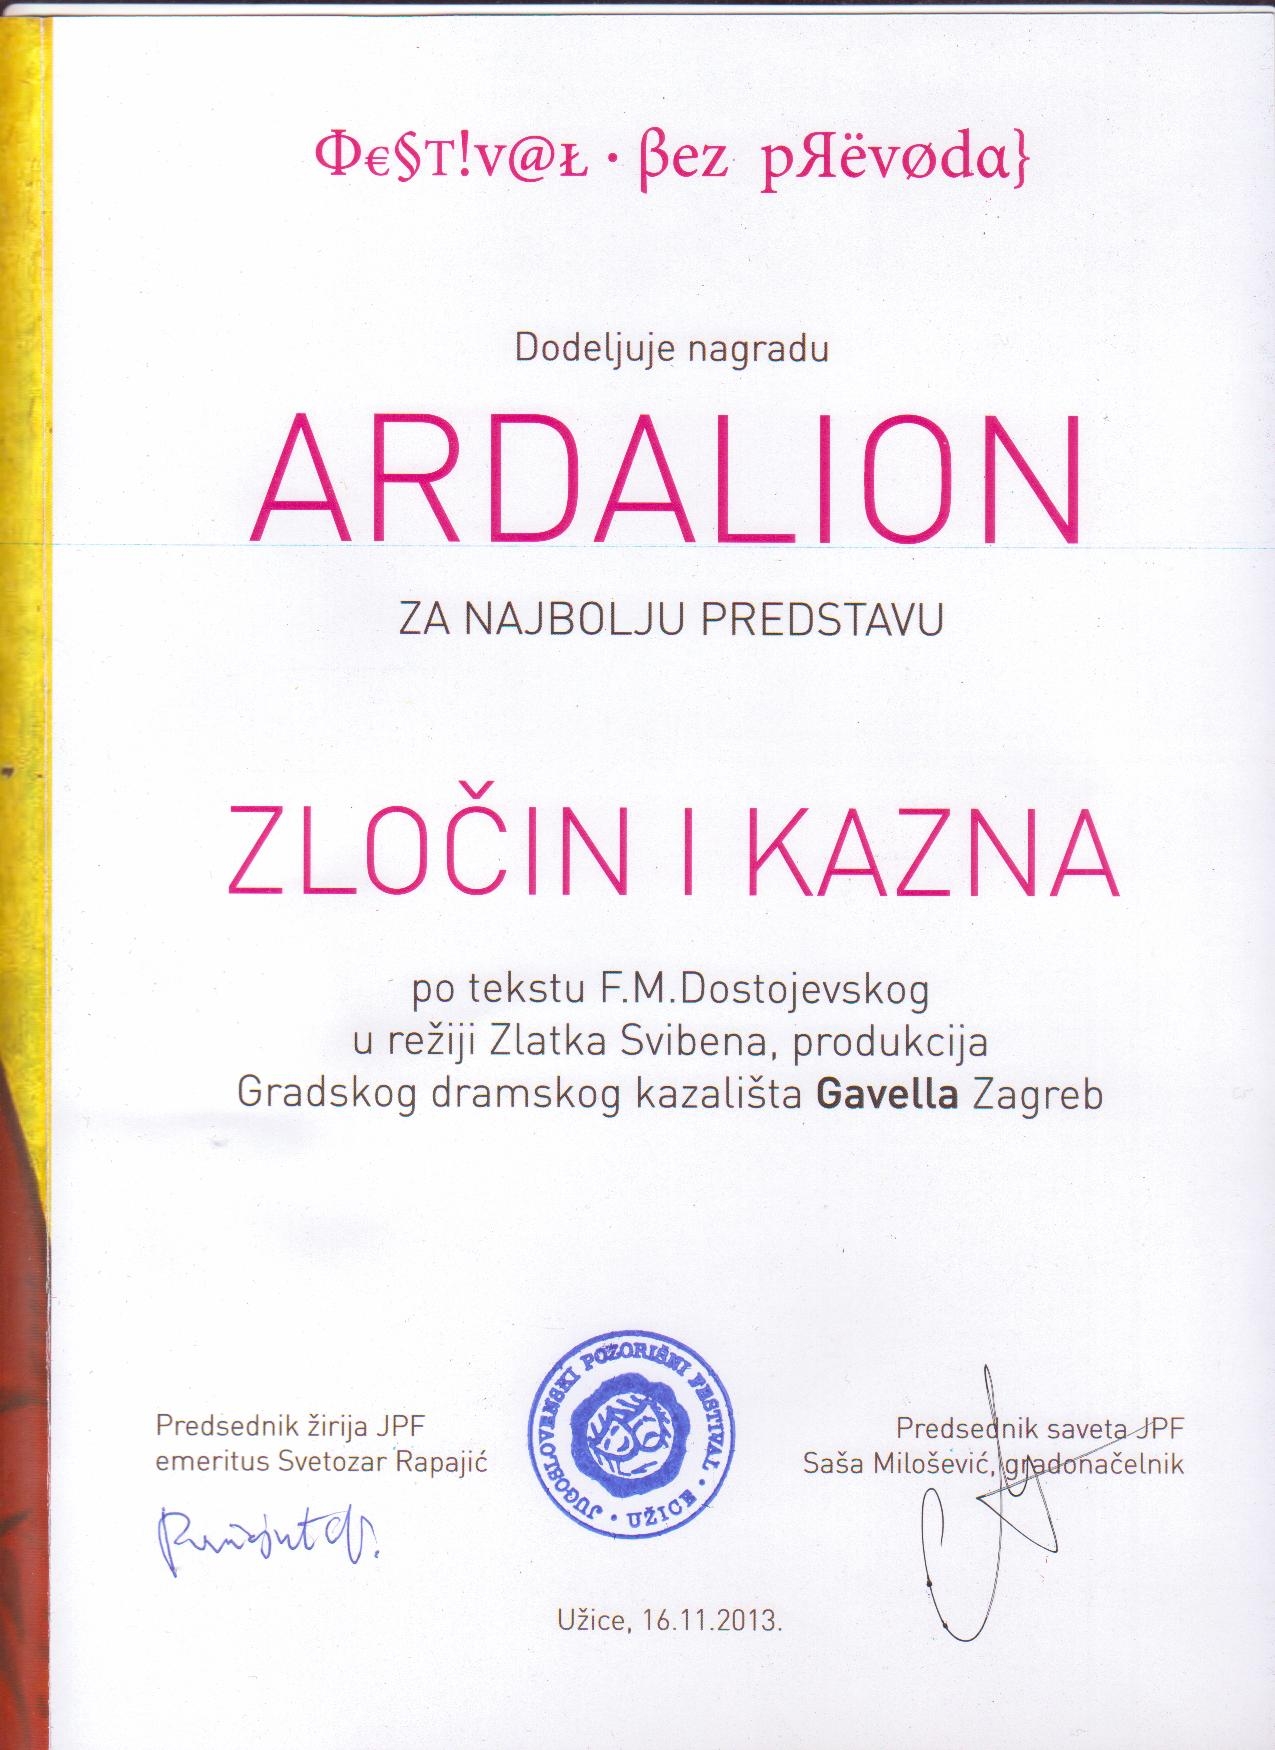 Uručene nagrade "Ardalion"